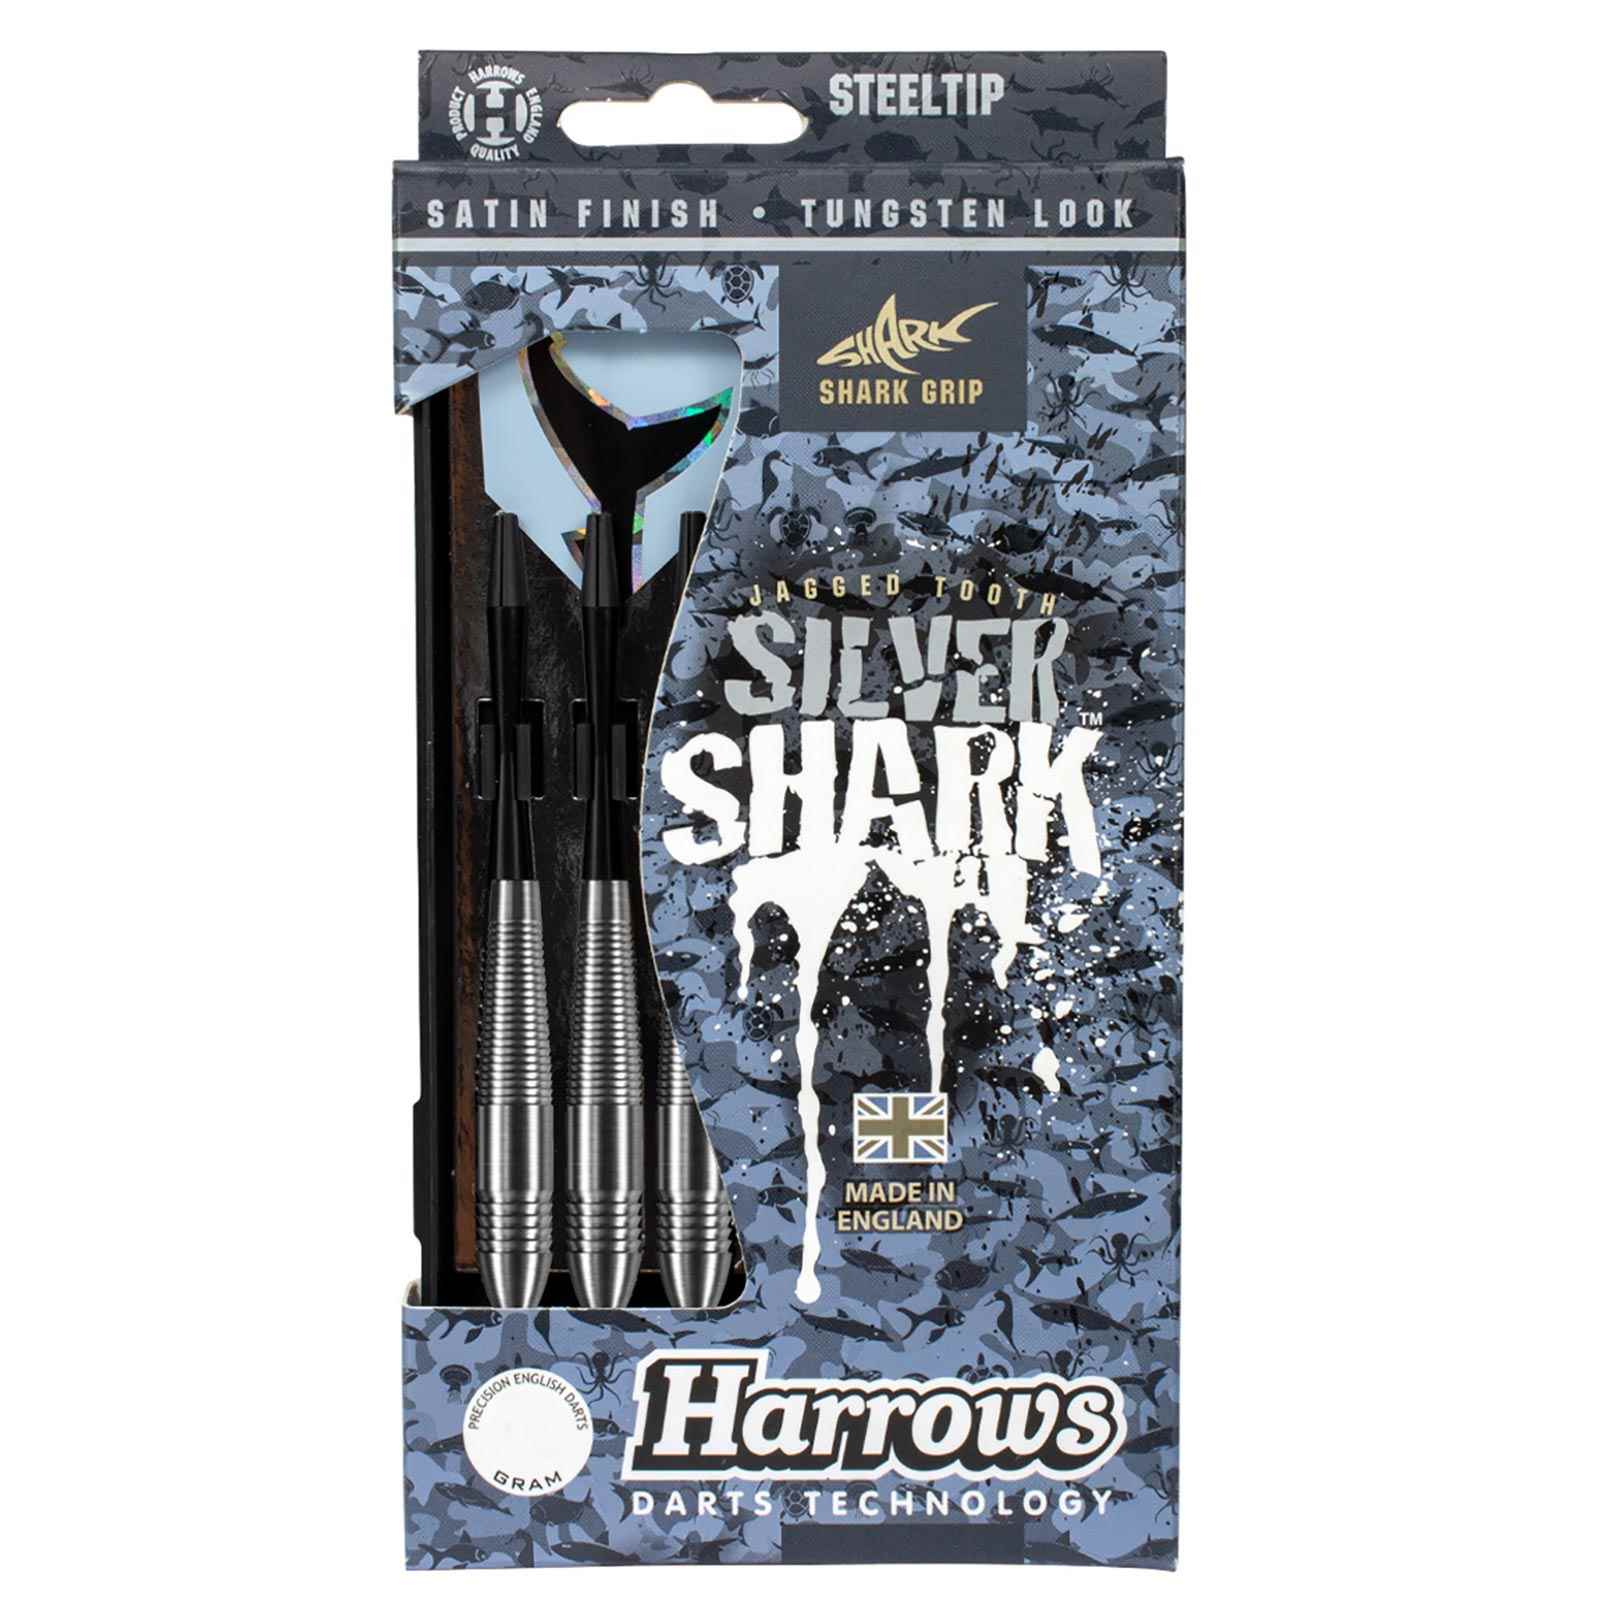 HARROWS SILVER SHARK 24G DARTS